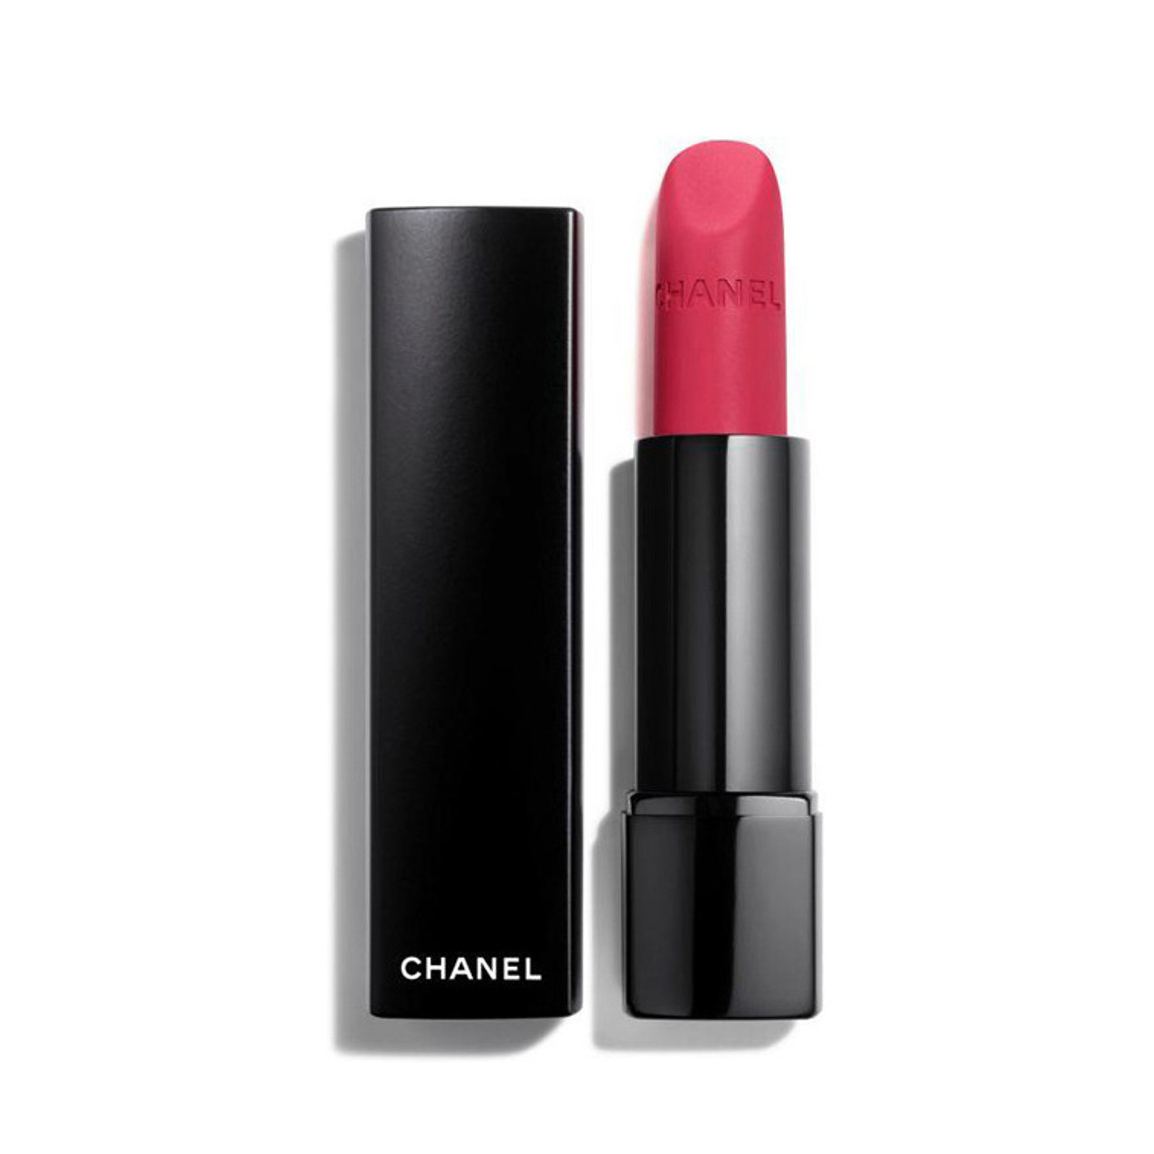 CHANEL Rouge Allure Velvet Extreme Intense Matte Lip Colour in Epitome, $56, available at myer.com.au